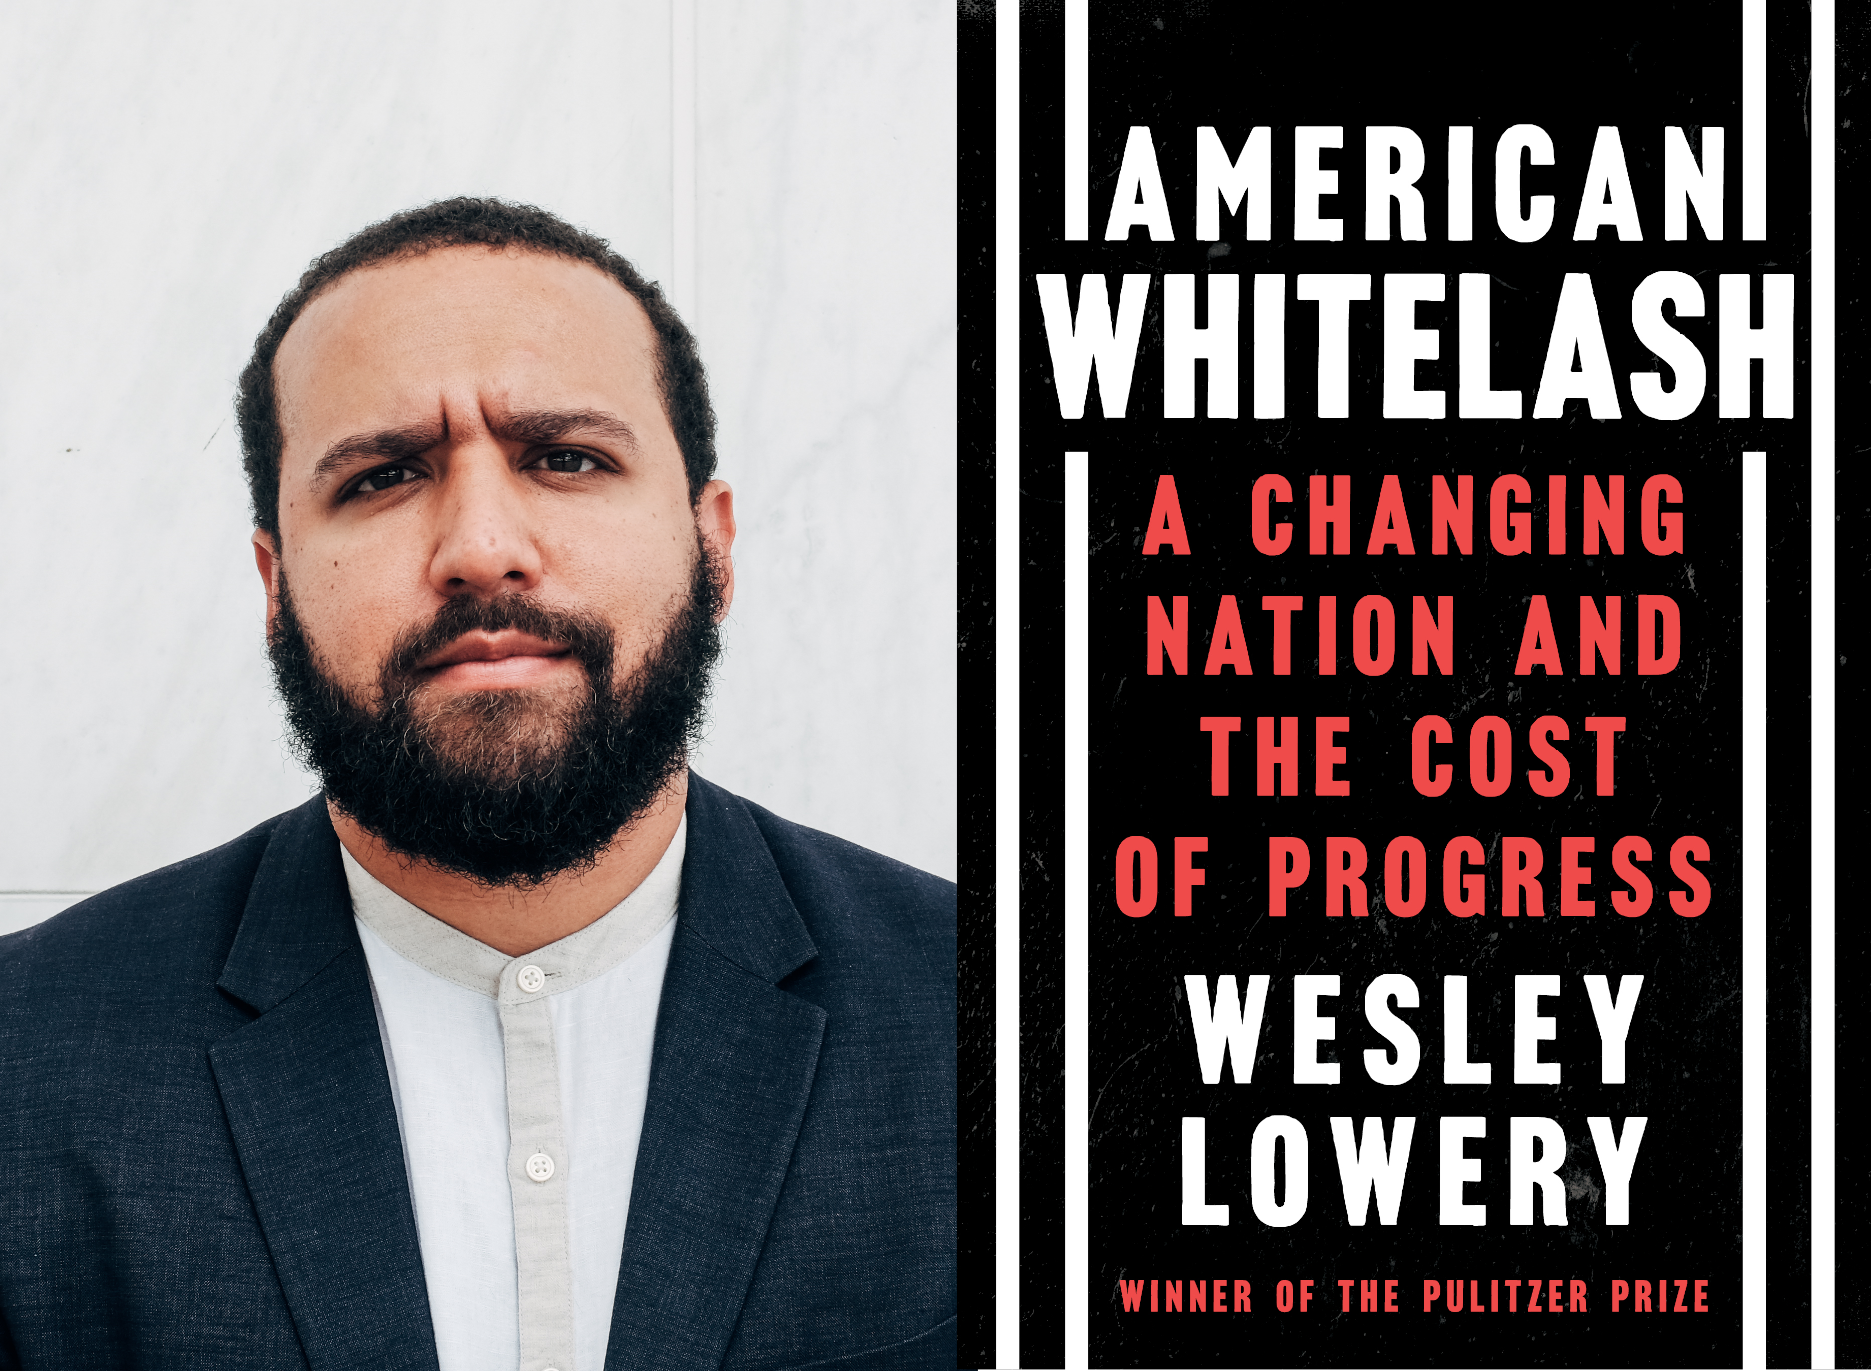 In "American Whitelash," Wesley Lowery examines white supremacy